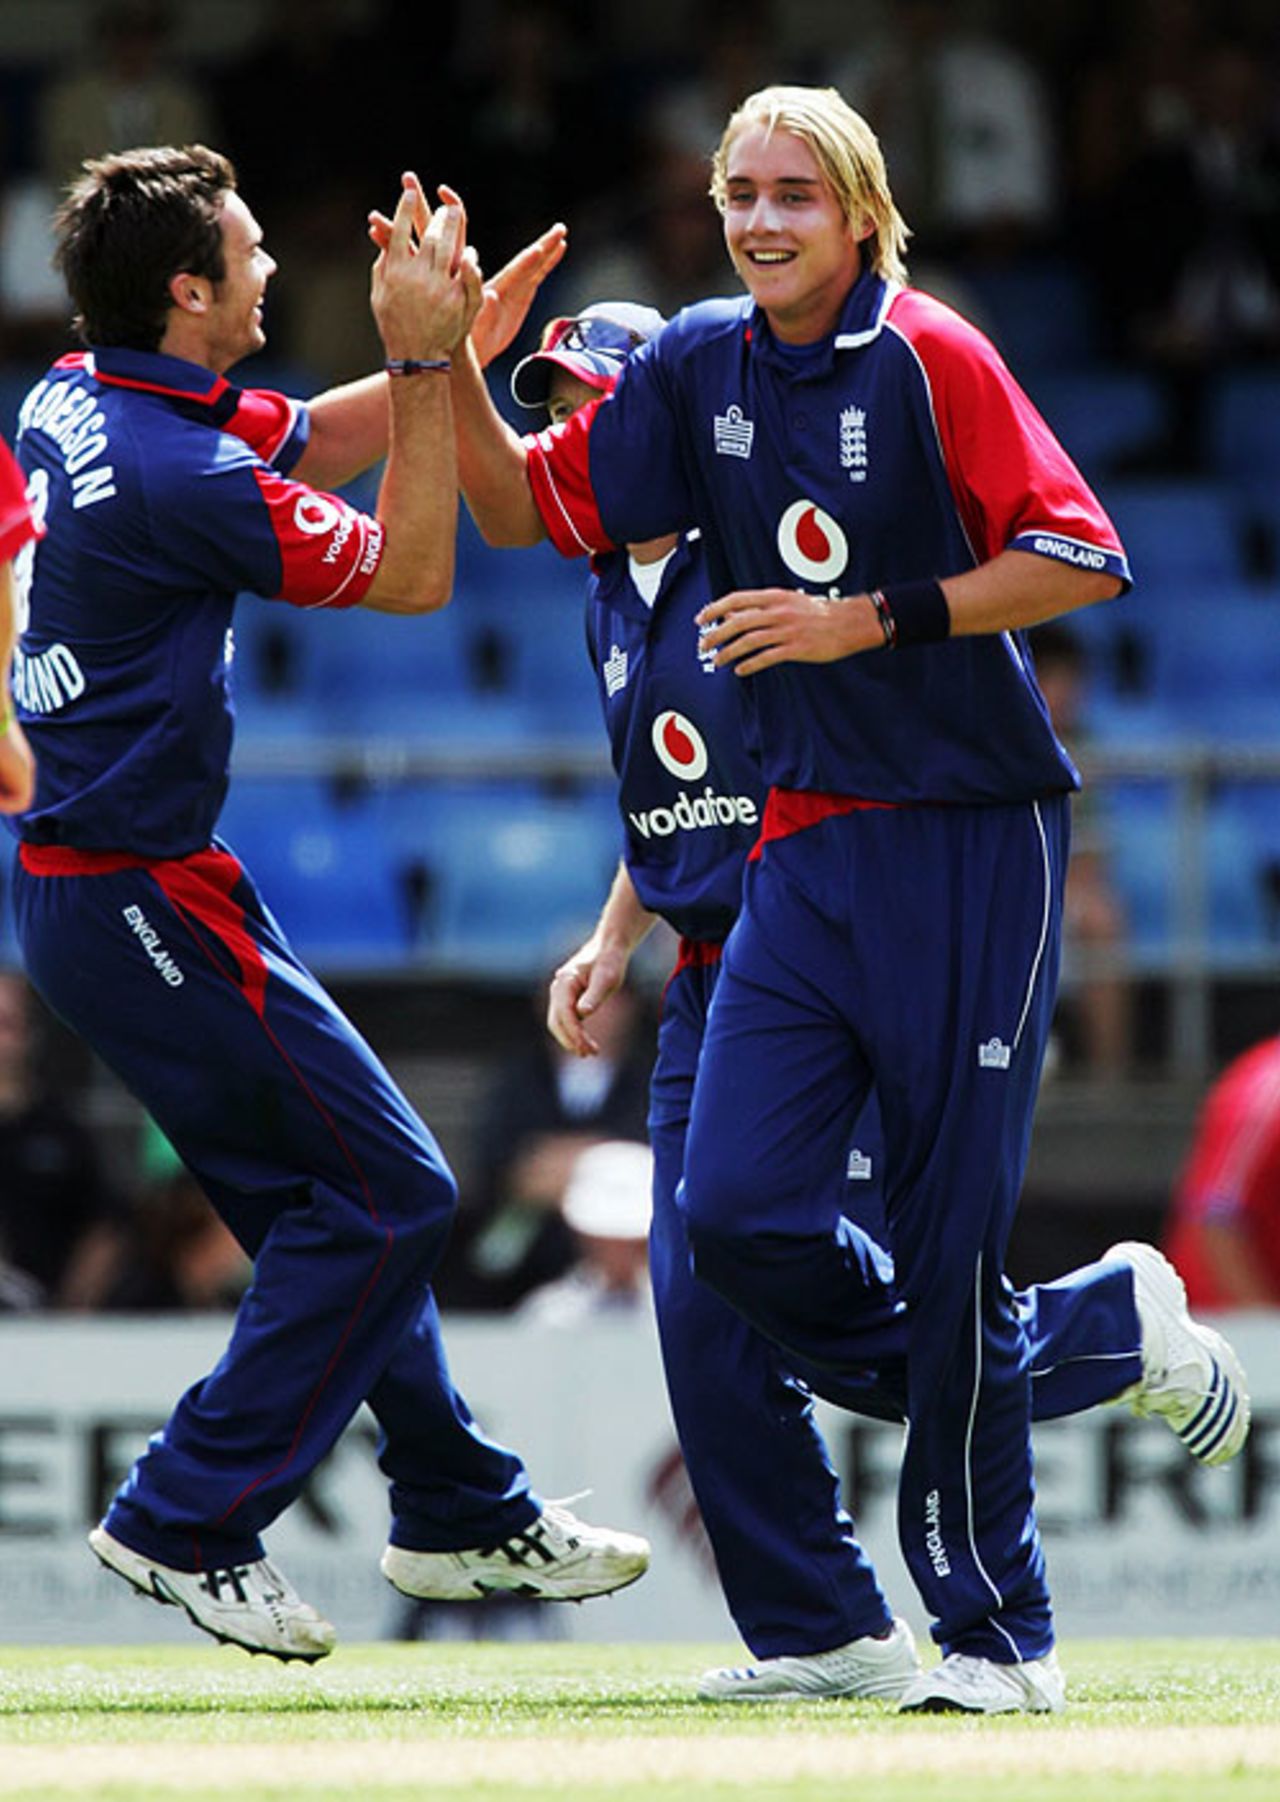 Stuart Broad claims the important wicket of Scott Styris, New Zealand v England, 3rd ODI, Auckland, February 15, 2008